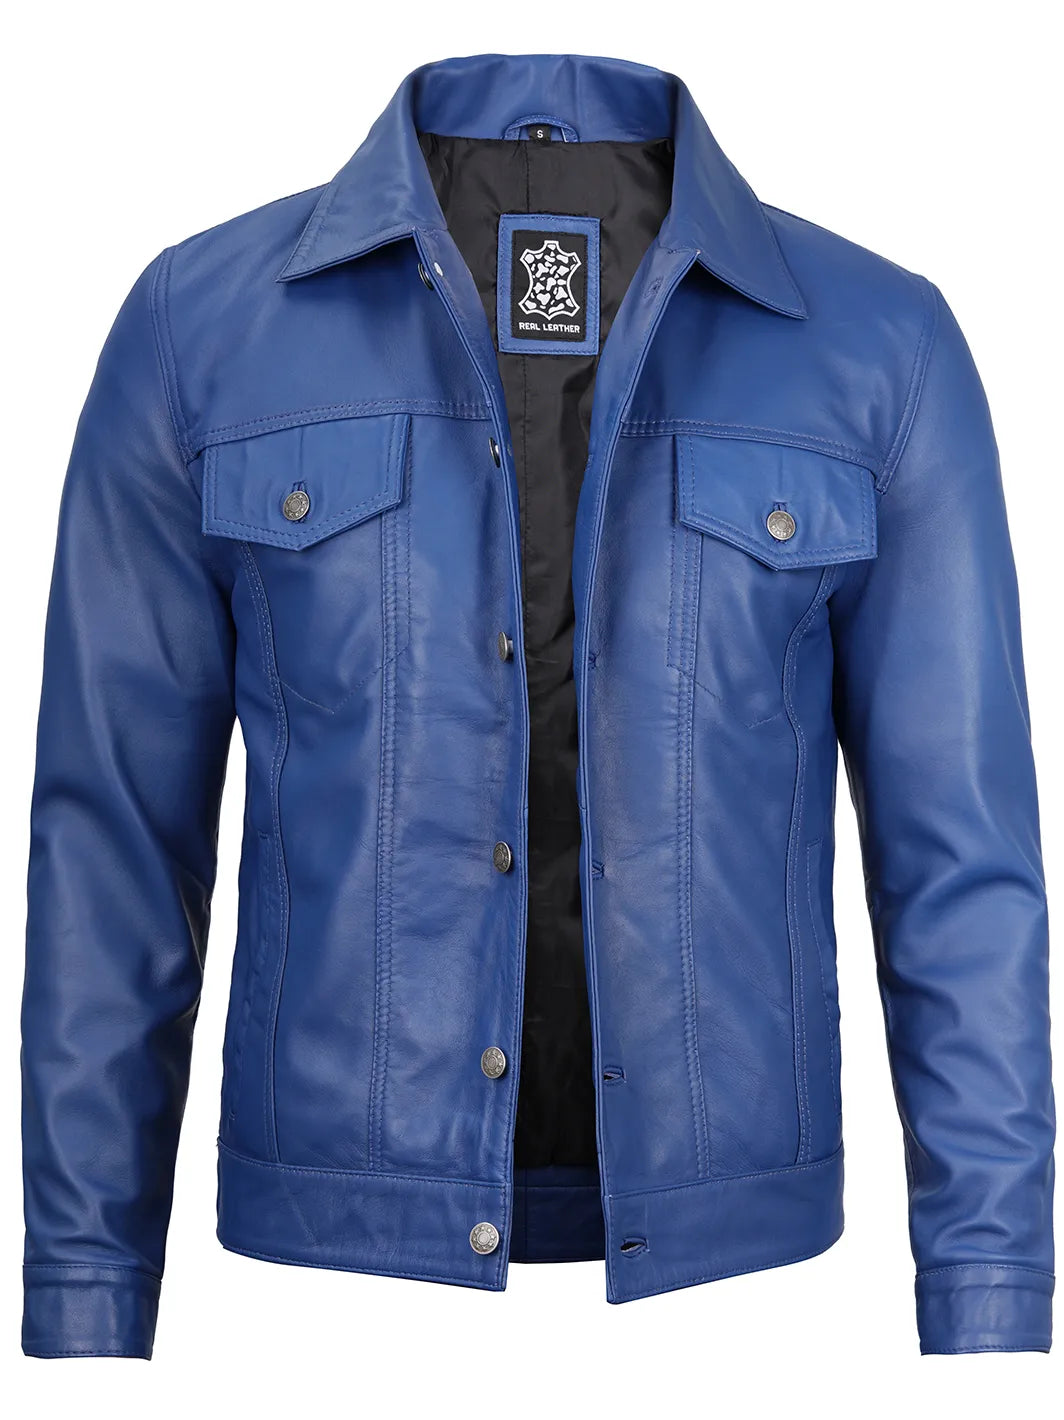 Mens blue leather jacket